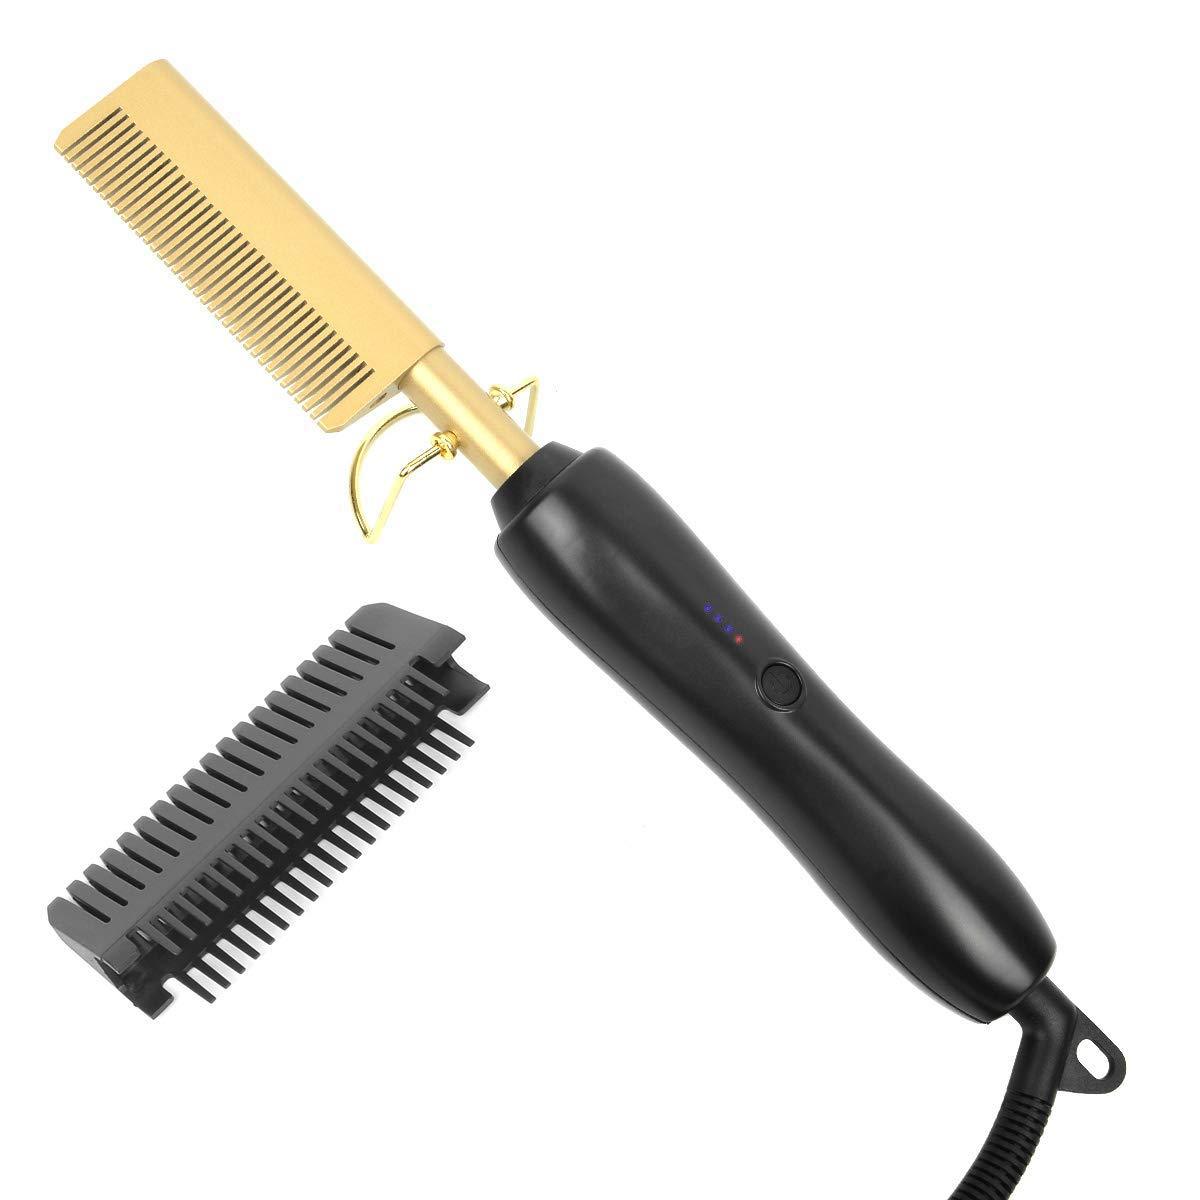 2 in 1 Gold Flat Iron Hair Straightener